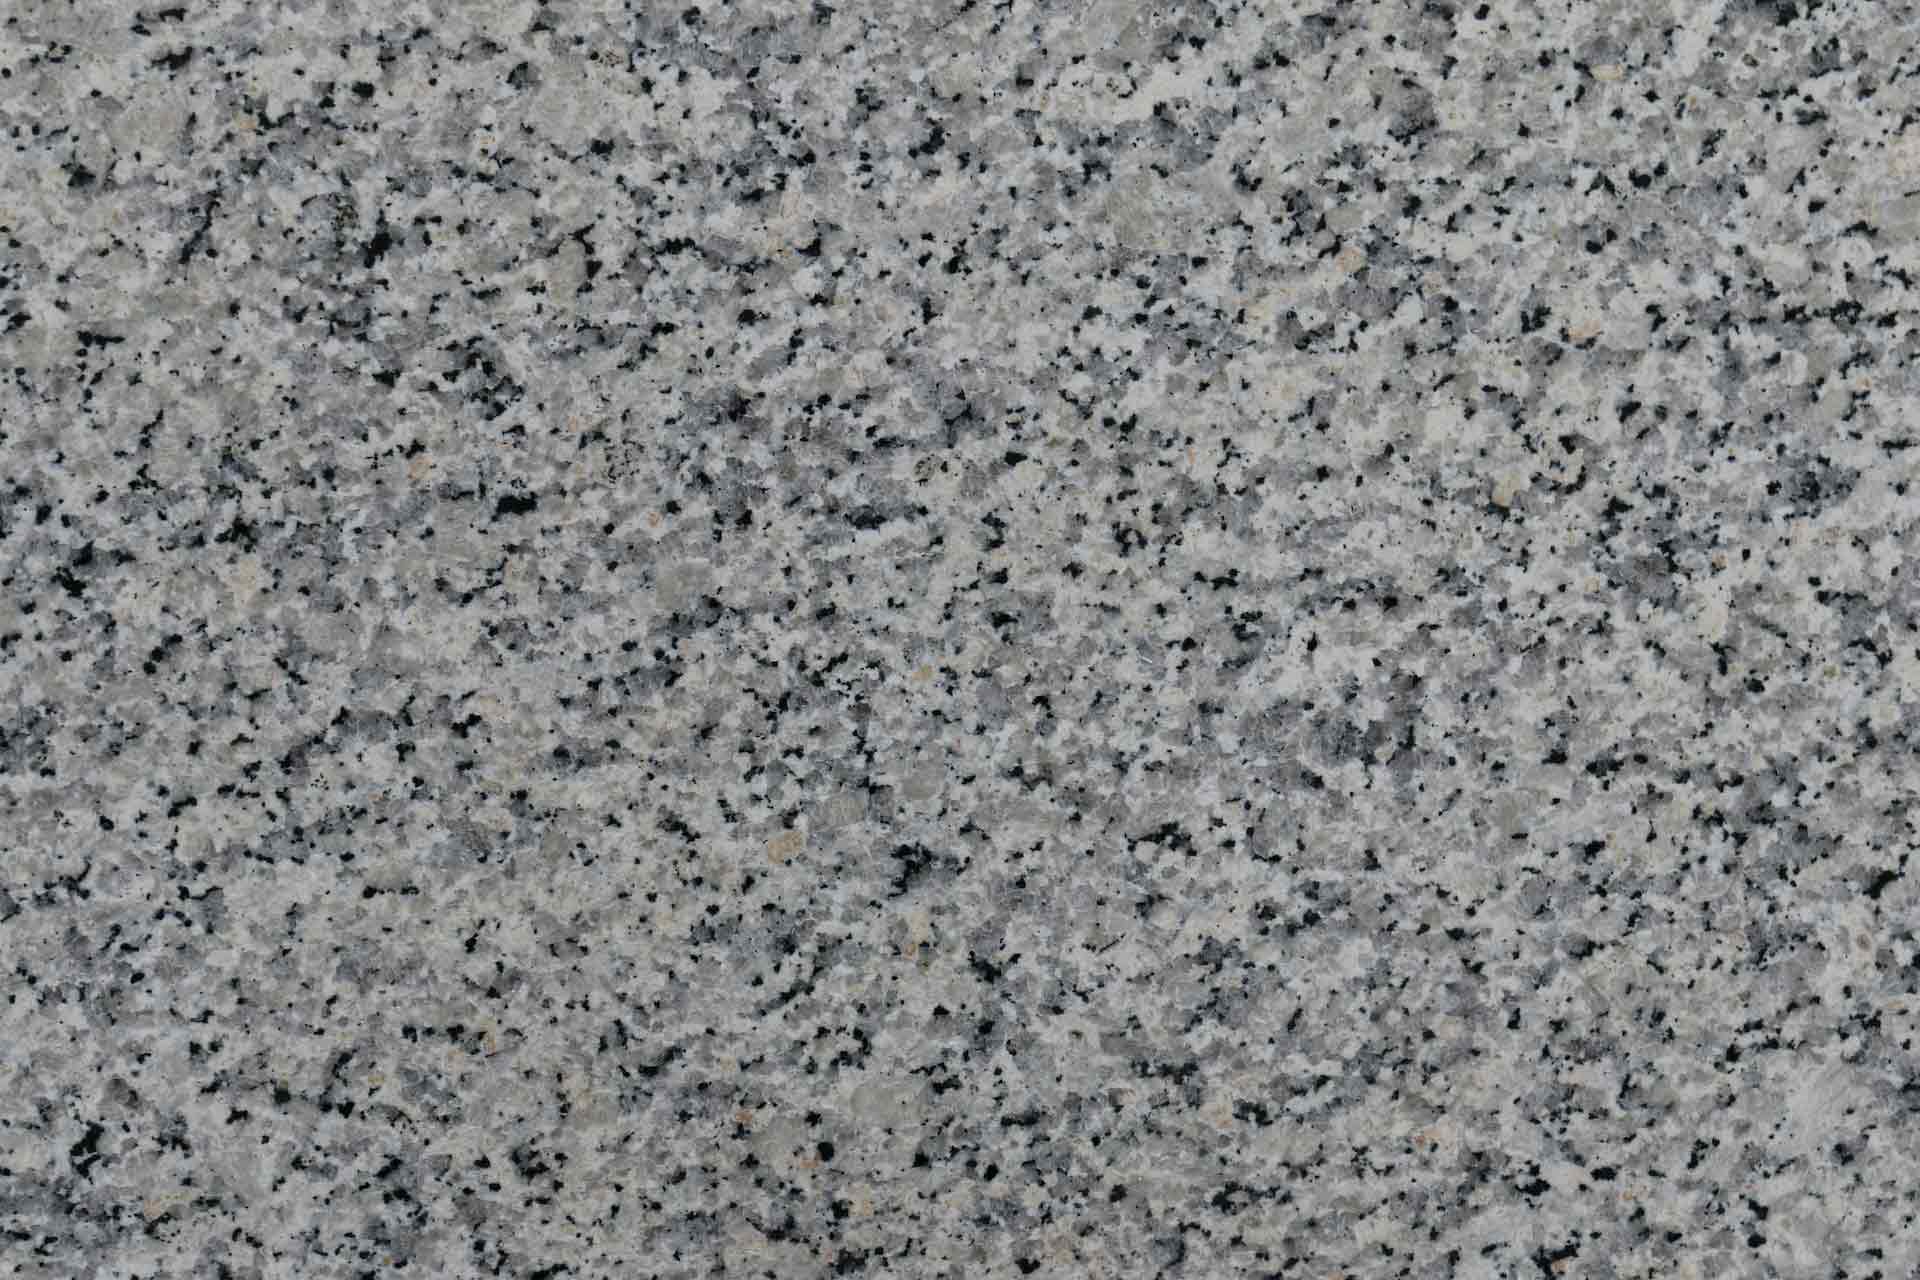 Close-up shot of granite slab